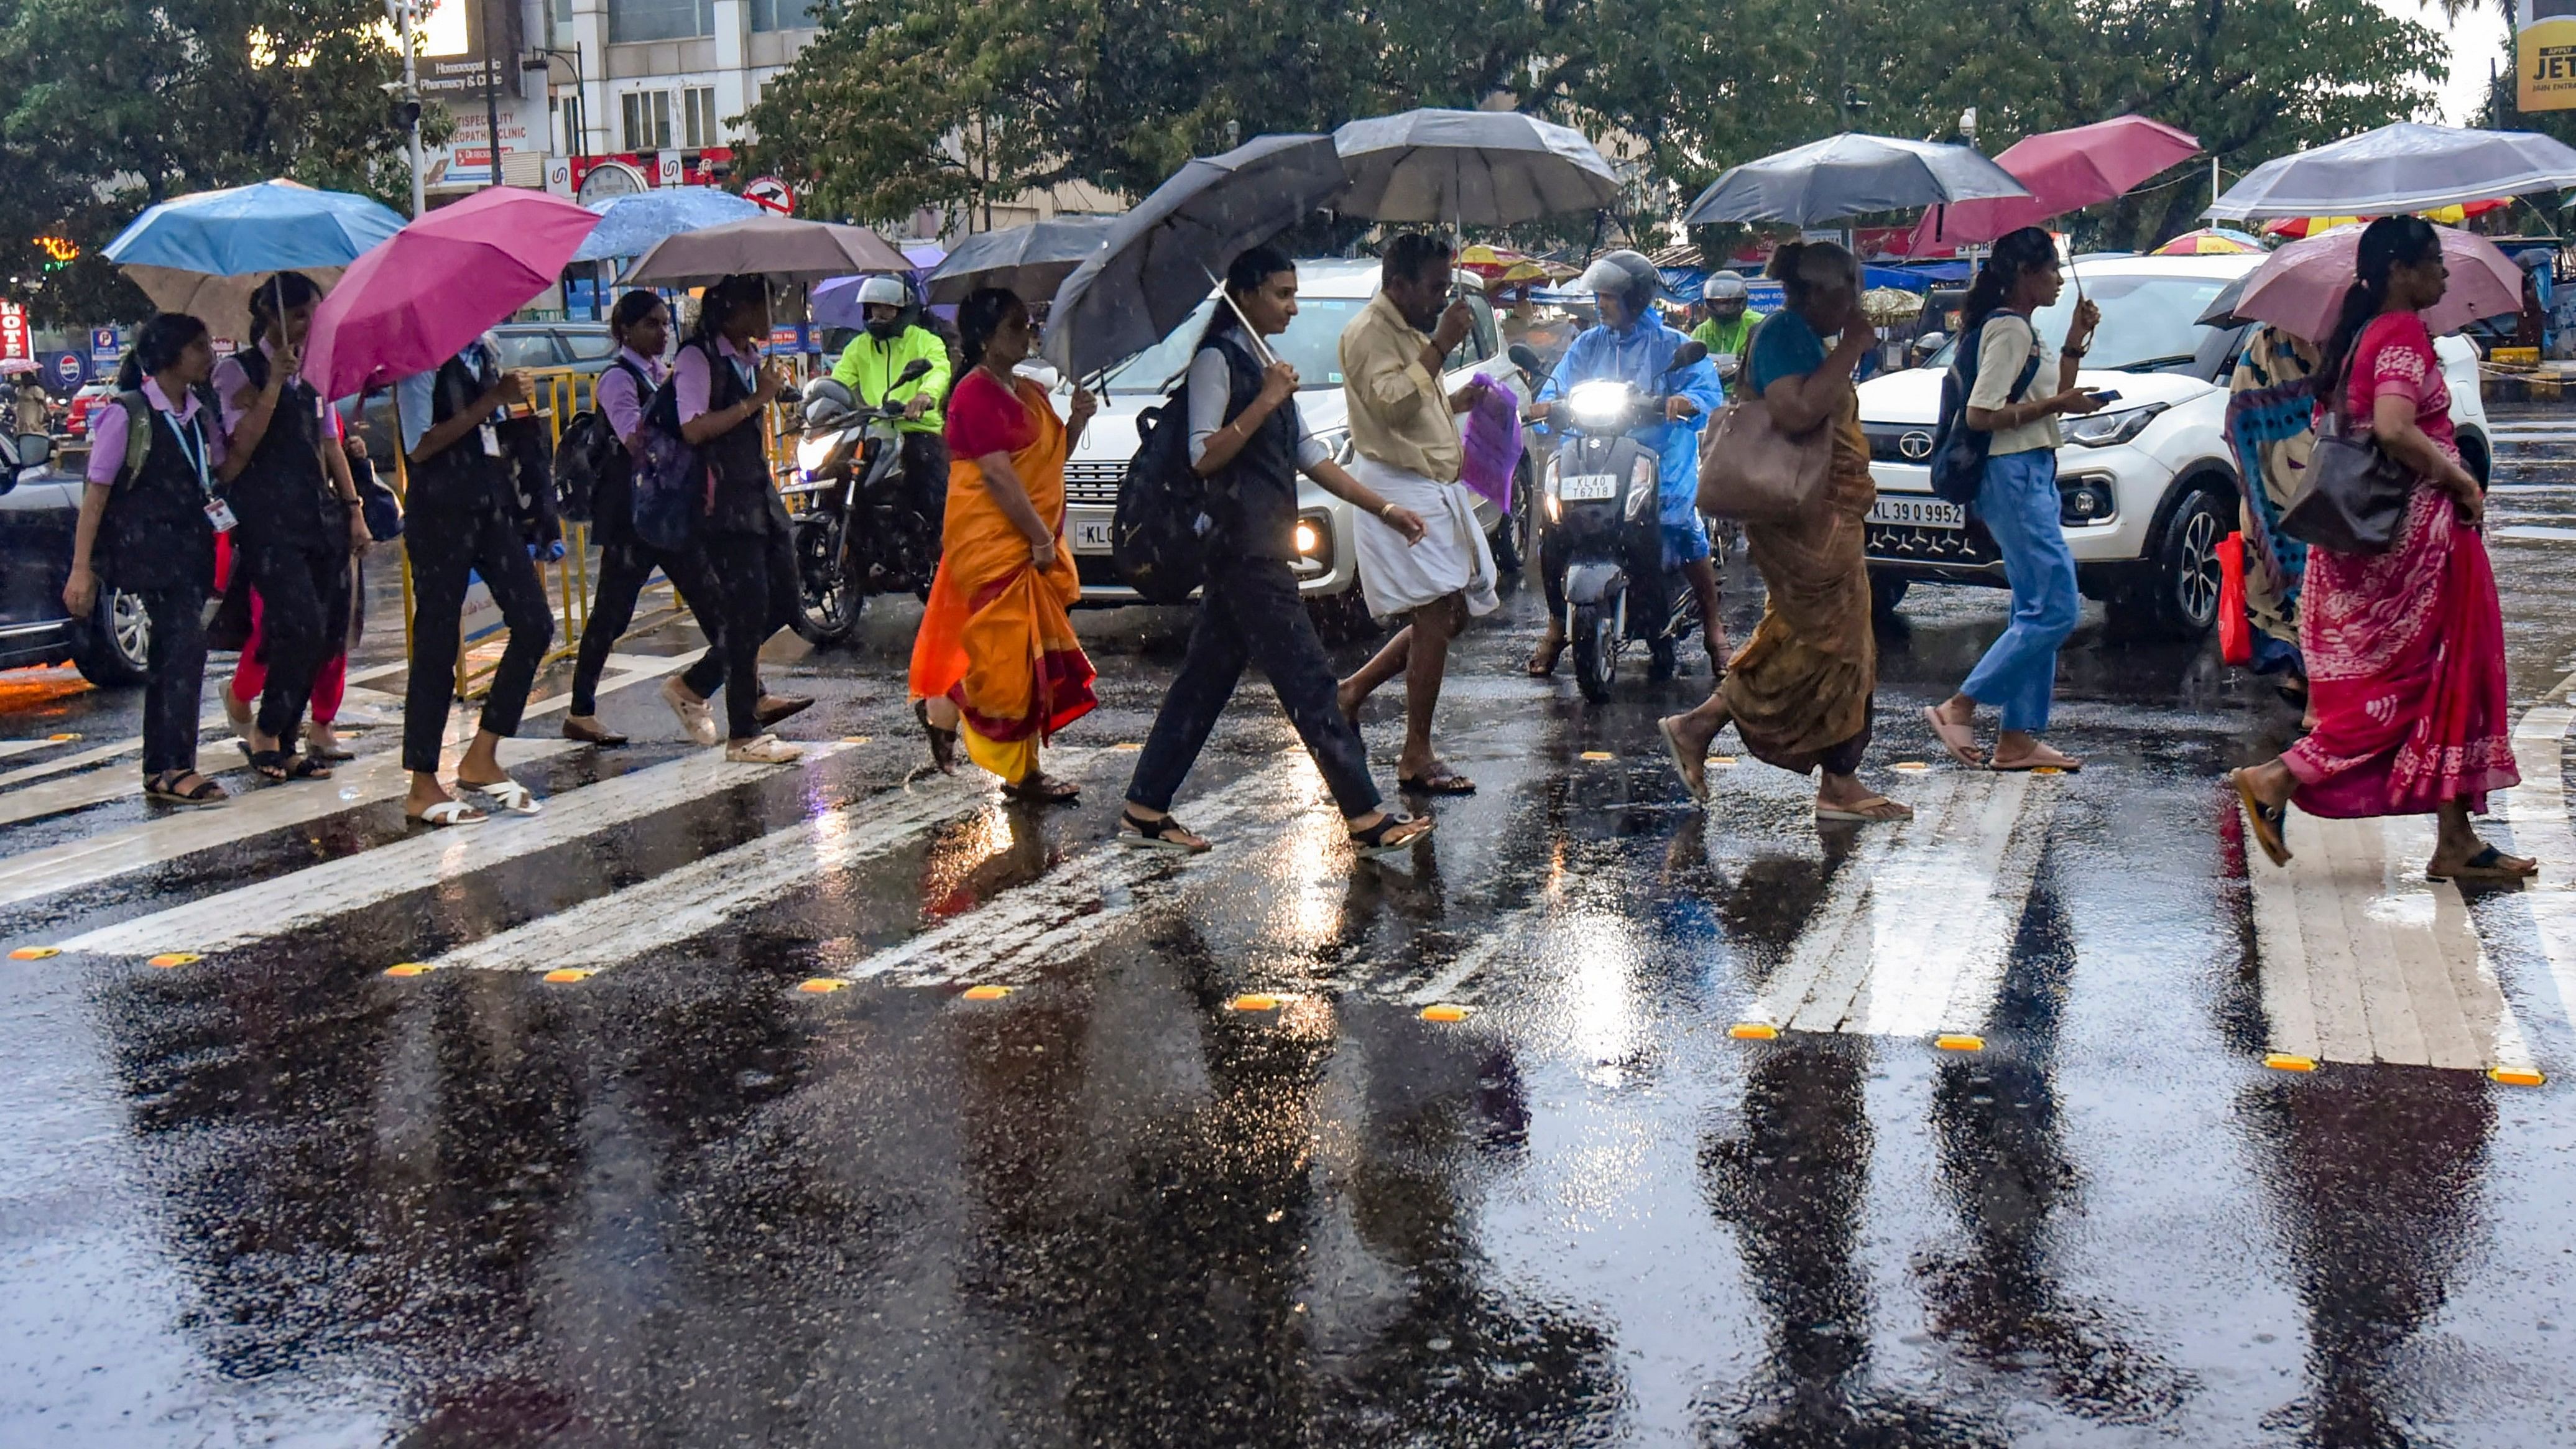 <div class="paragraphs"><p>Pedestrians hold umbrellas as they cross a street amid rains.</p></div>